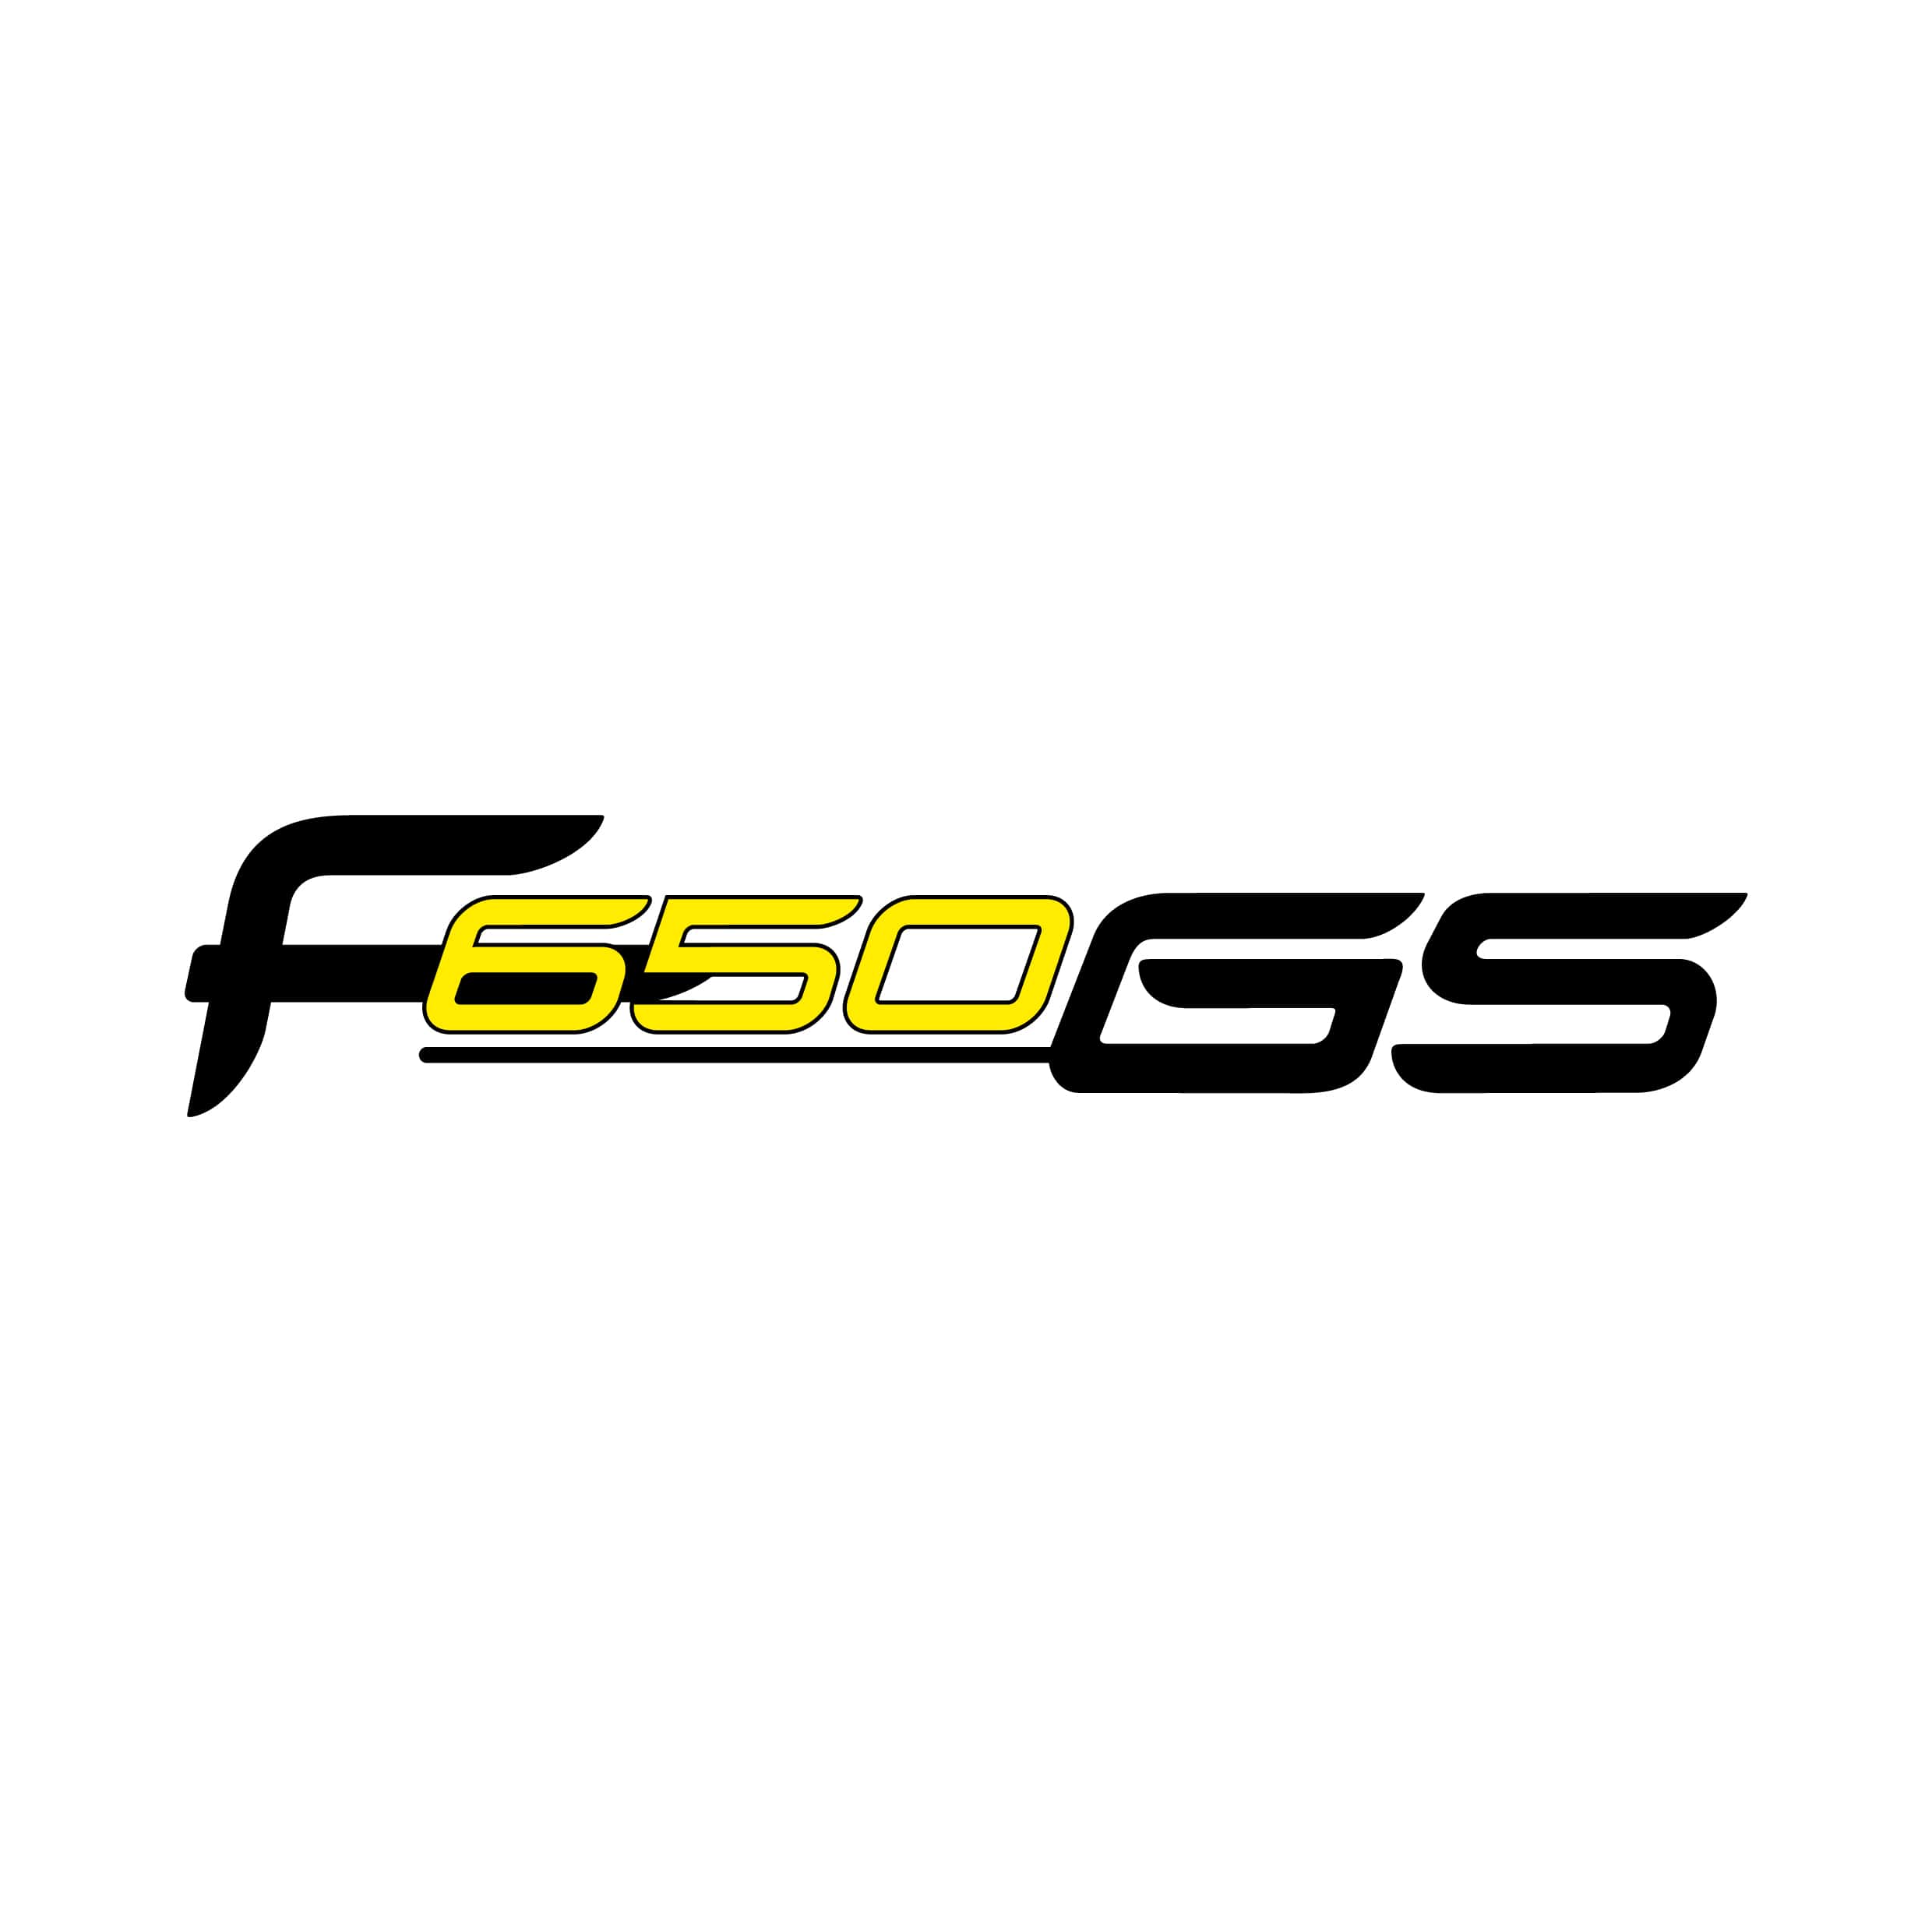 stickers-bmw-f650gs-ref1-autocollant-moto-sticker-deux-roue-autocollants-decals-sponsors-tuning-sport-logo-bike-min